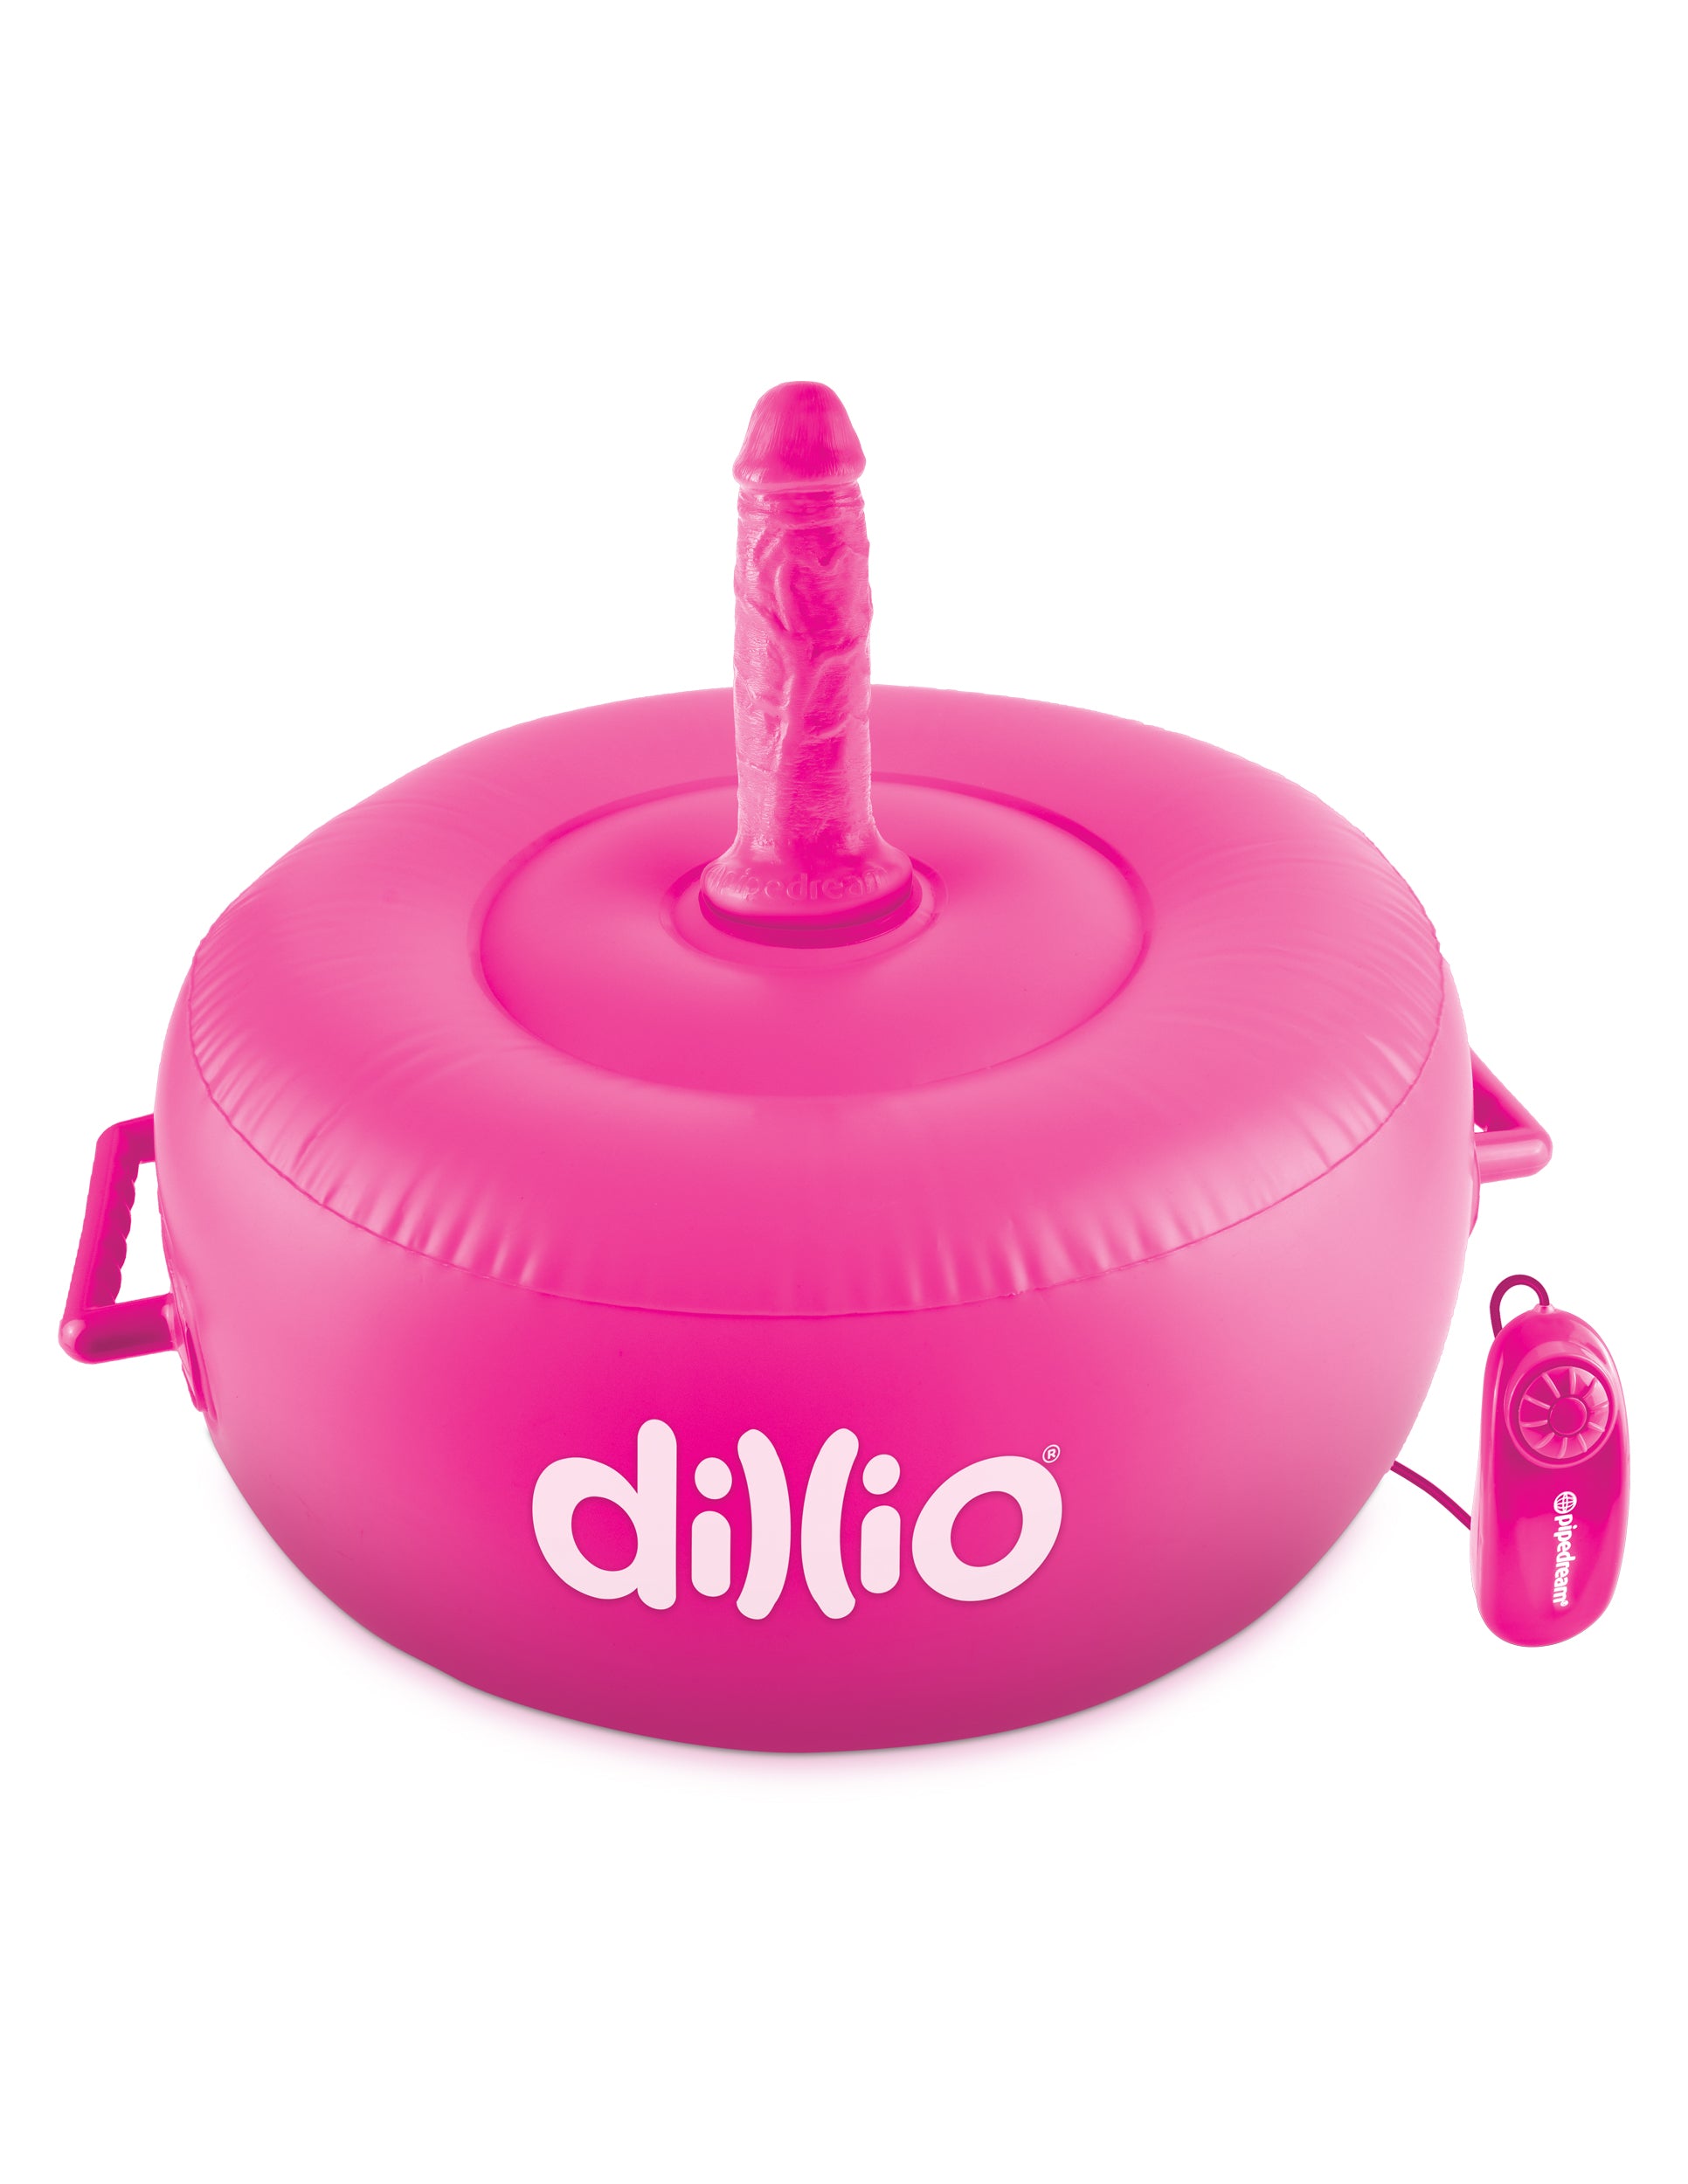 Dillio Vibrating Hot Seat Pink - Club X